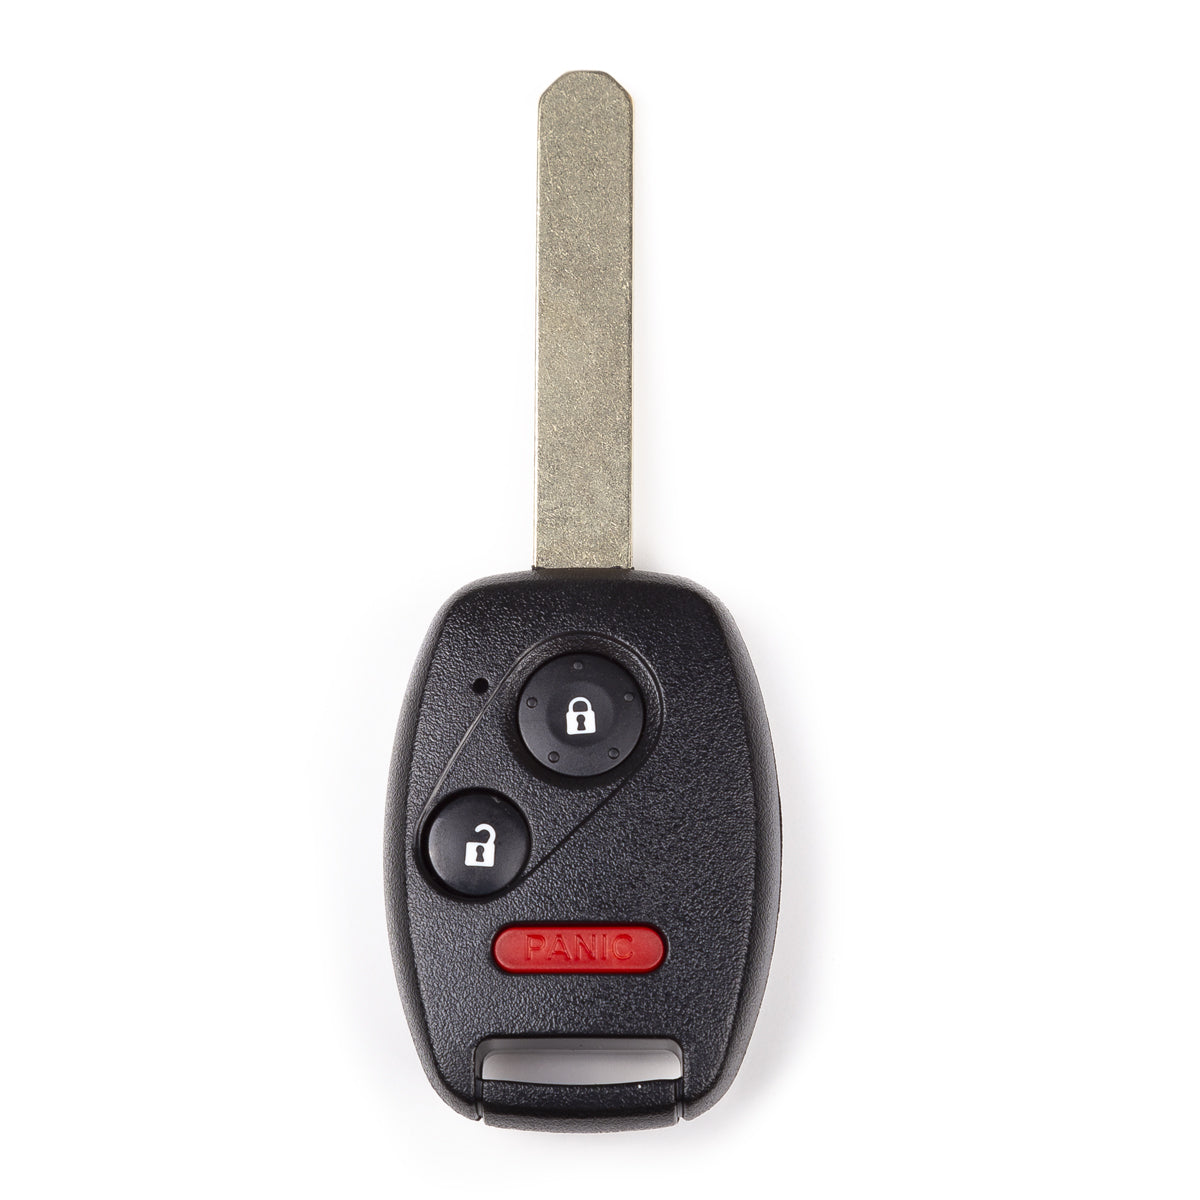 2013 Honda CR-V Key Fob 3 Buttons FCC # MLBHLIK-1T